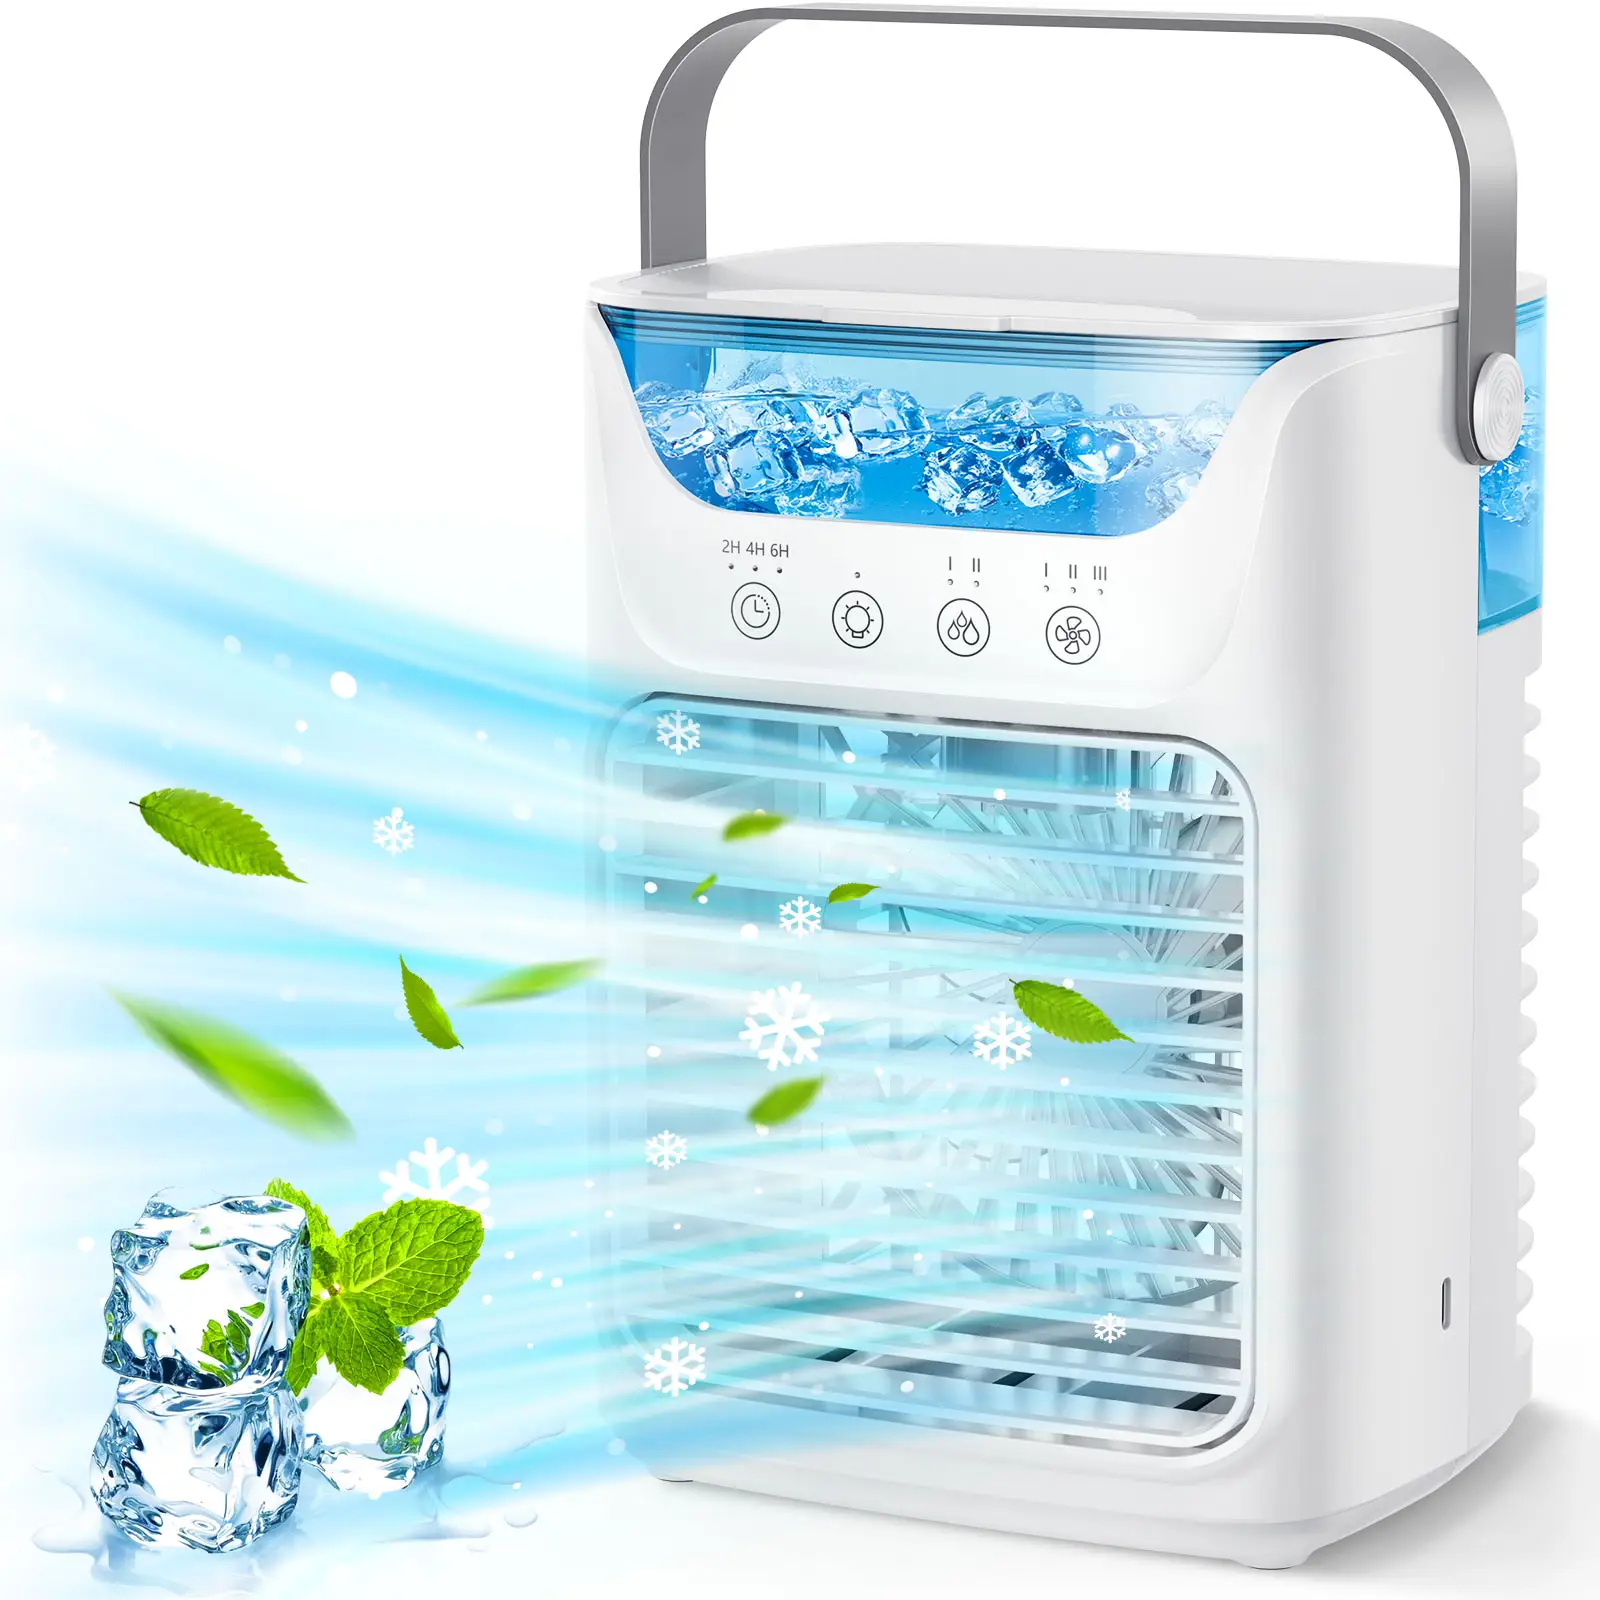 Haushalt kleiner Luftkühler Ventilator tragbarer Luftbefeuchter Klimagerät Kühlung Ventilator mit Wasserspray